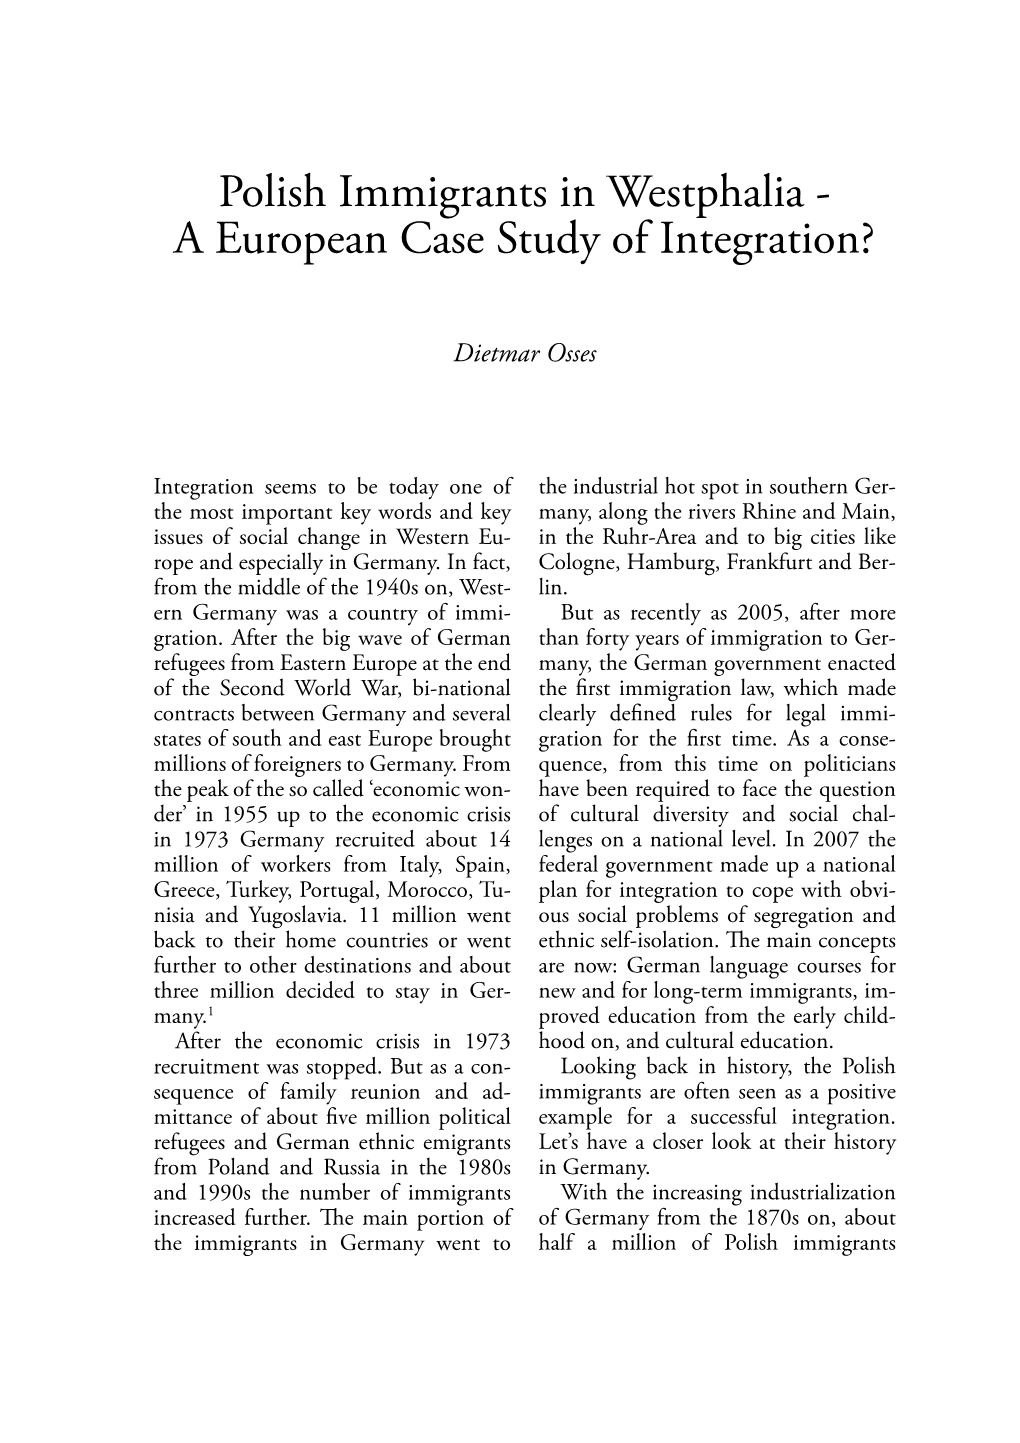 Polish Immigrants in Westphalia - a European Case Study of Integration?